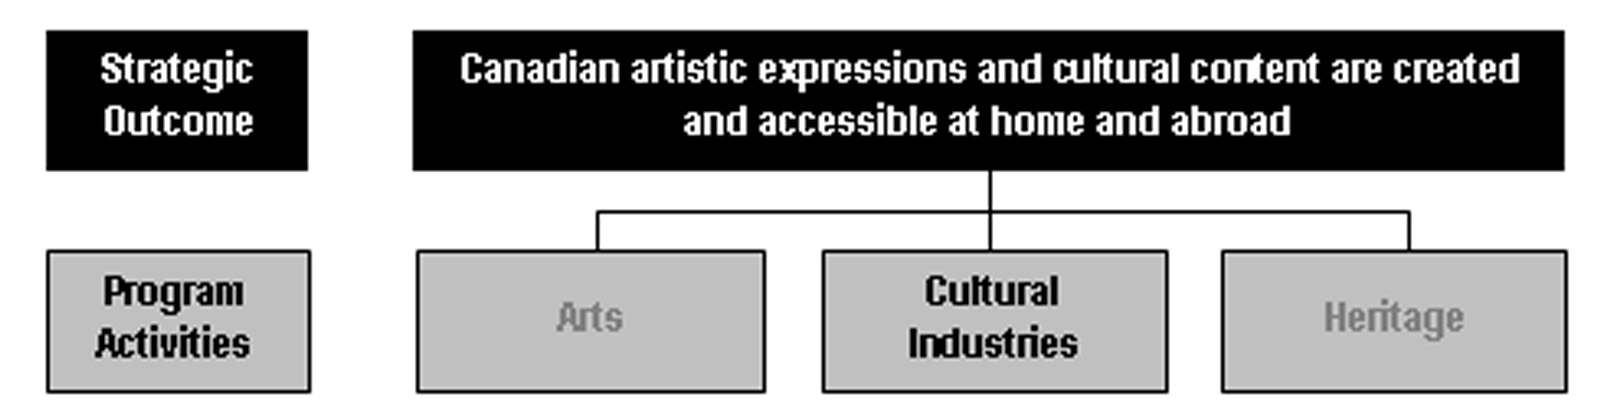 Program Activity 2: Cultural Industries